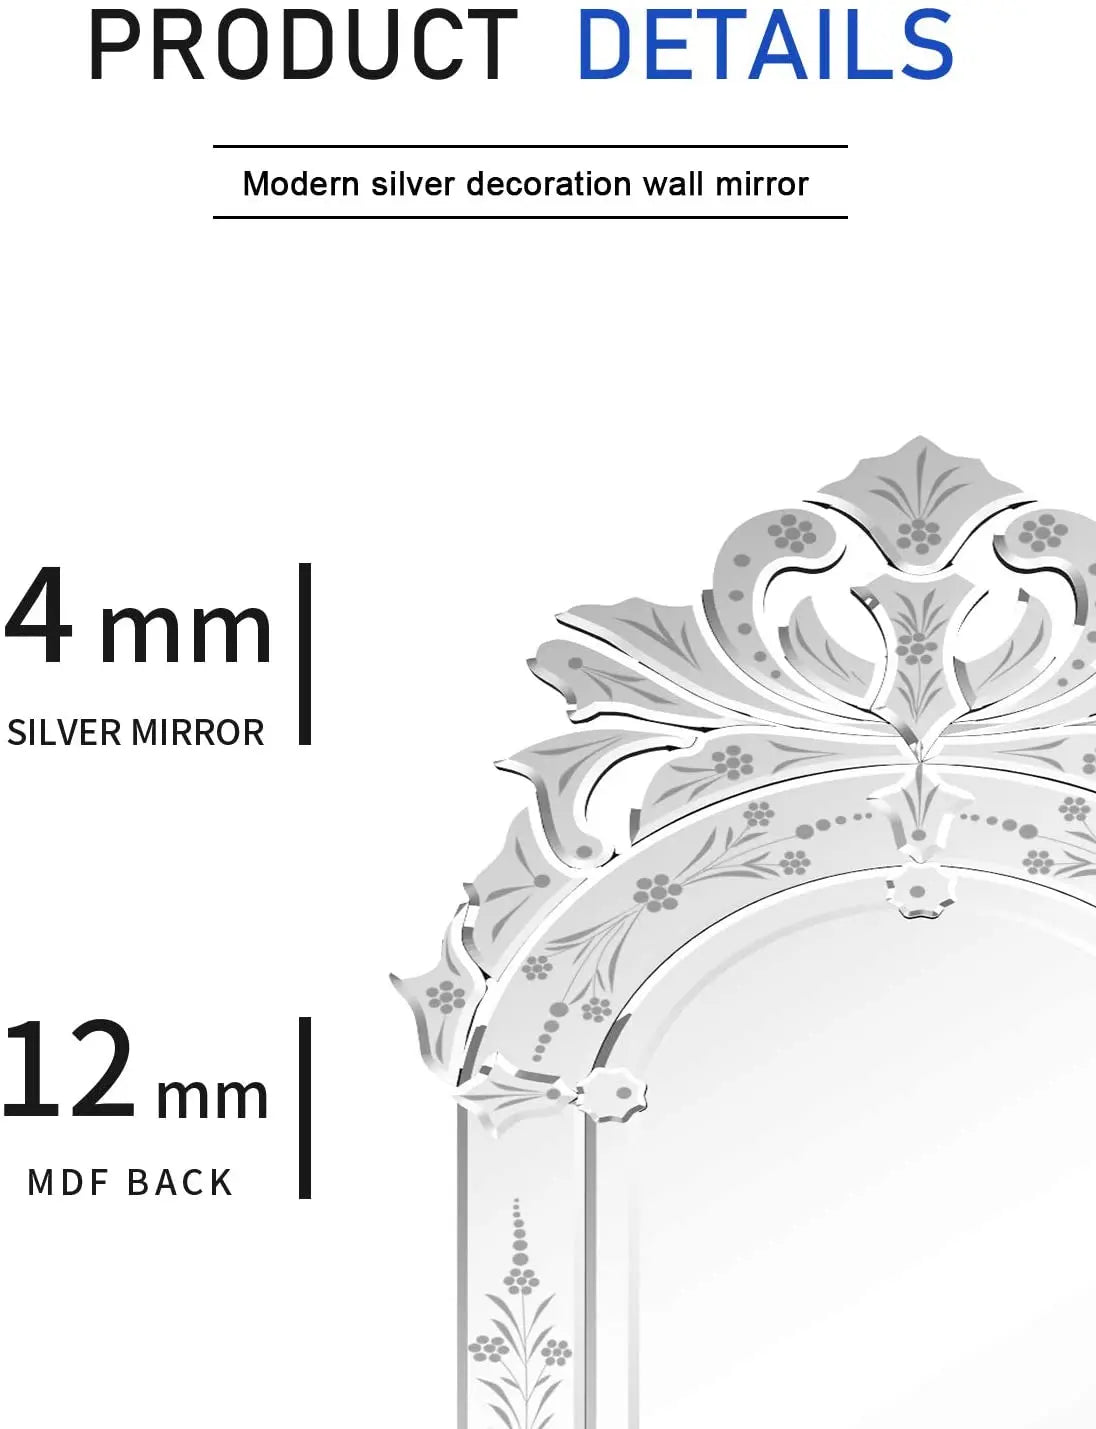 Venetian Rectangle Wall Mirror VD-801 Venetian Design 100% Heart Made Products